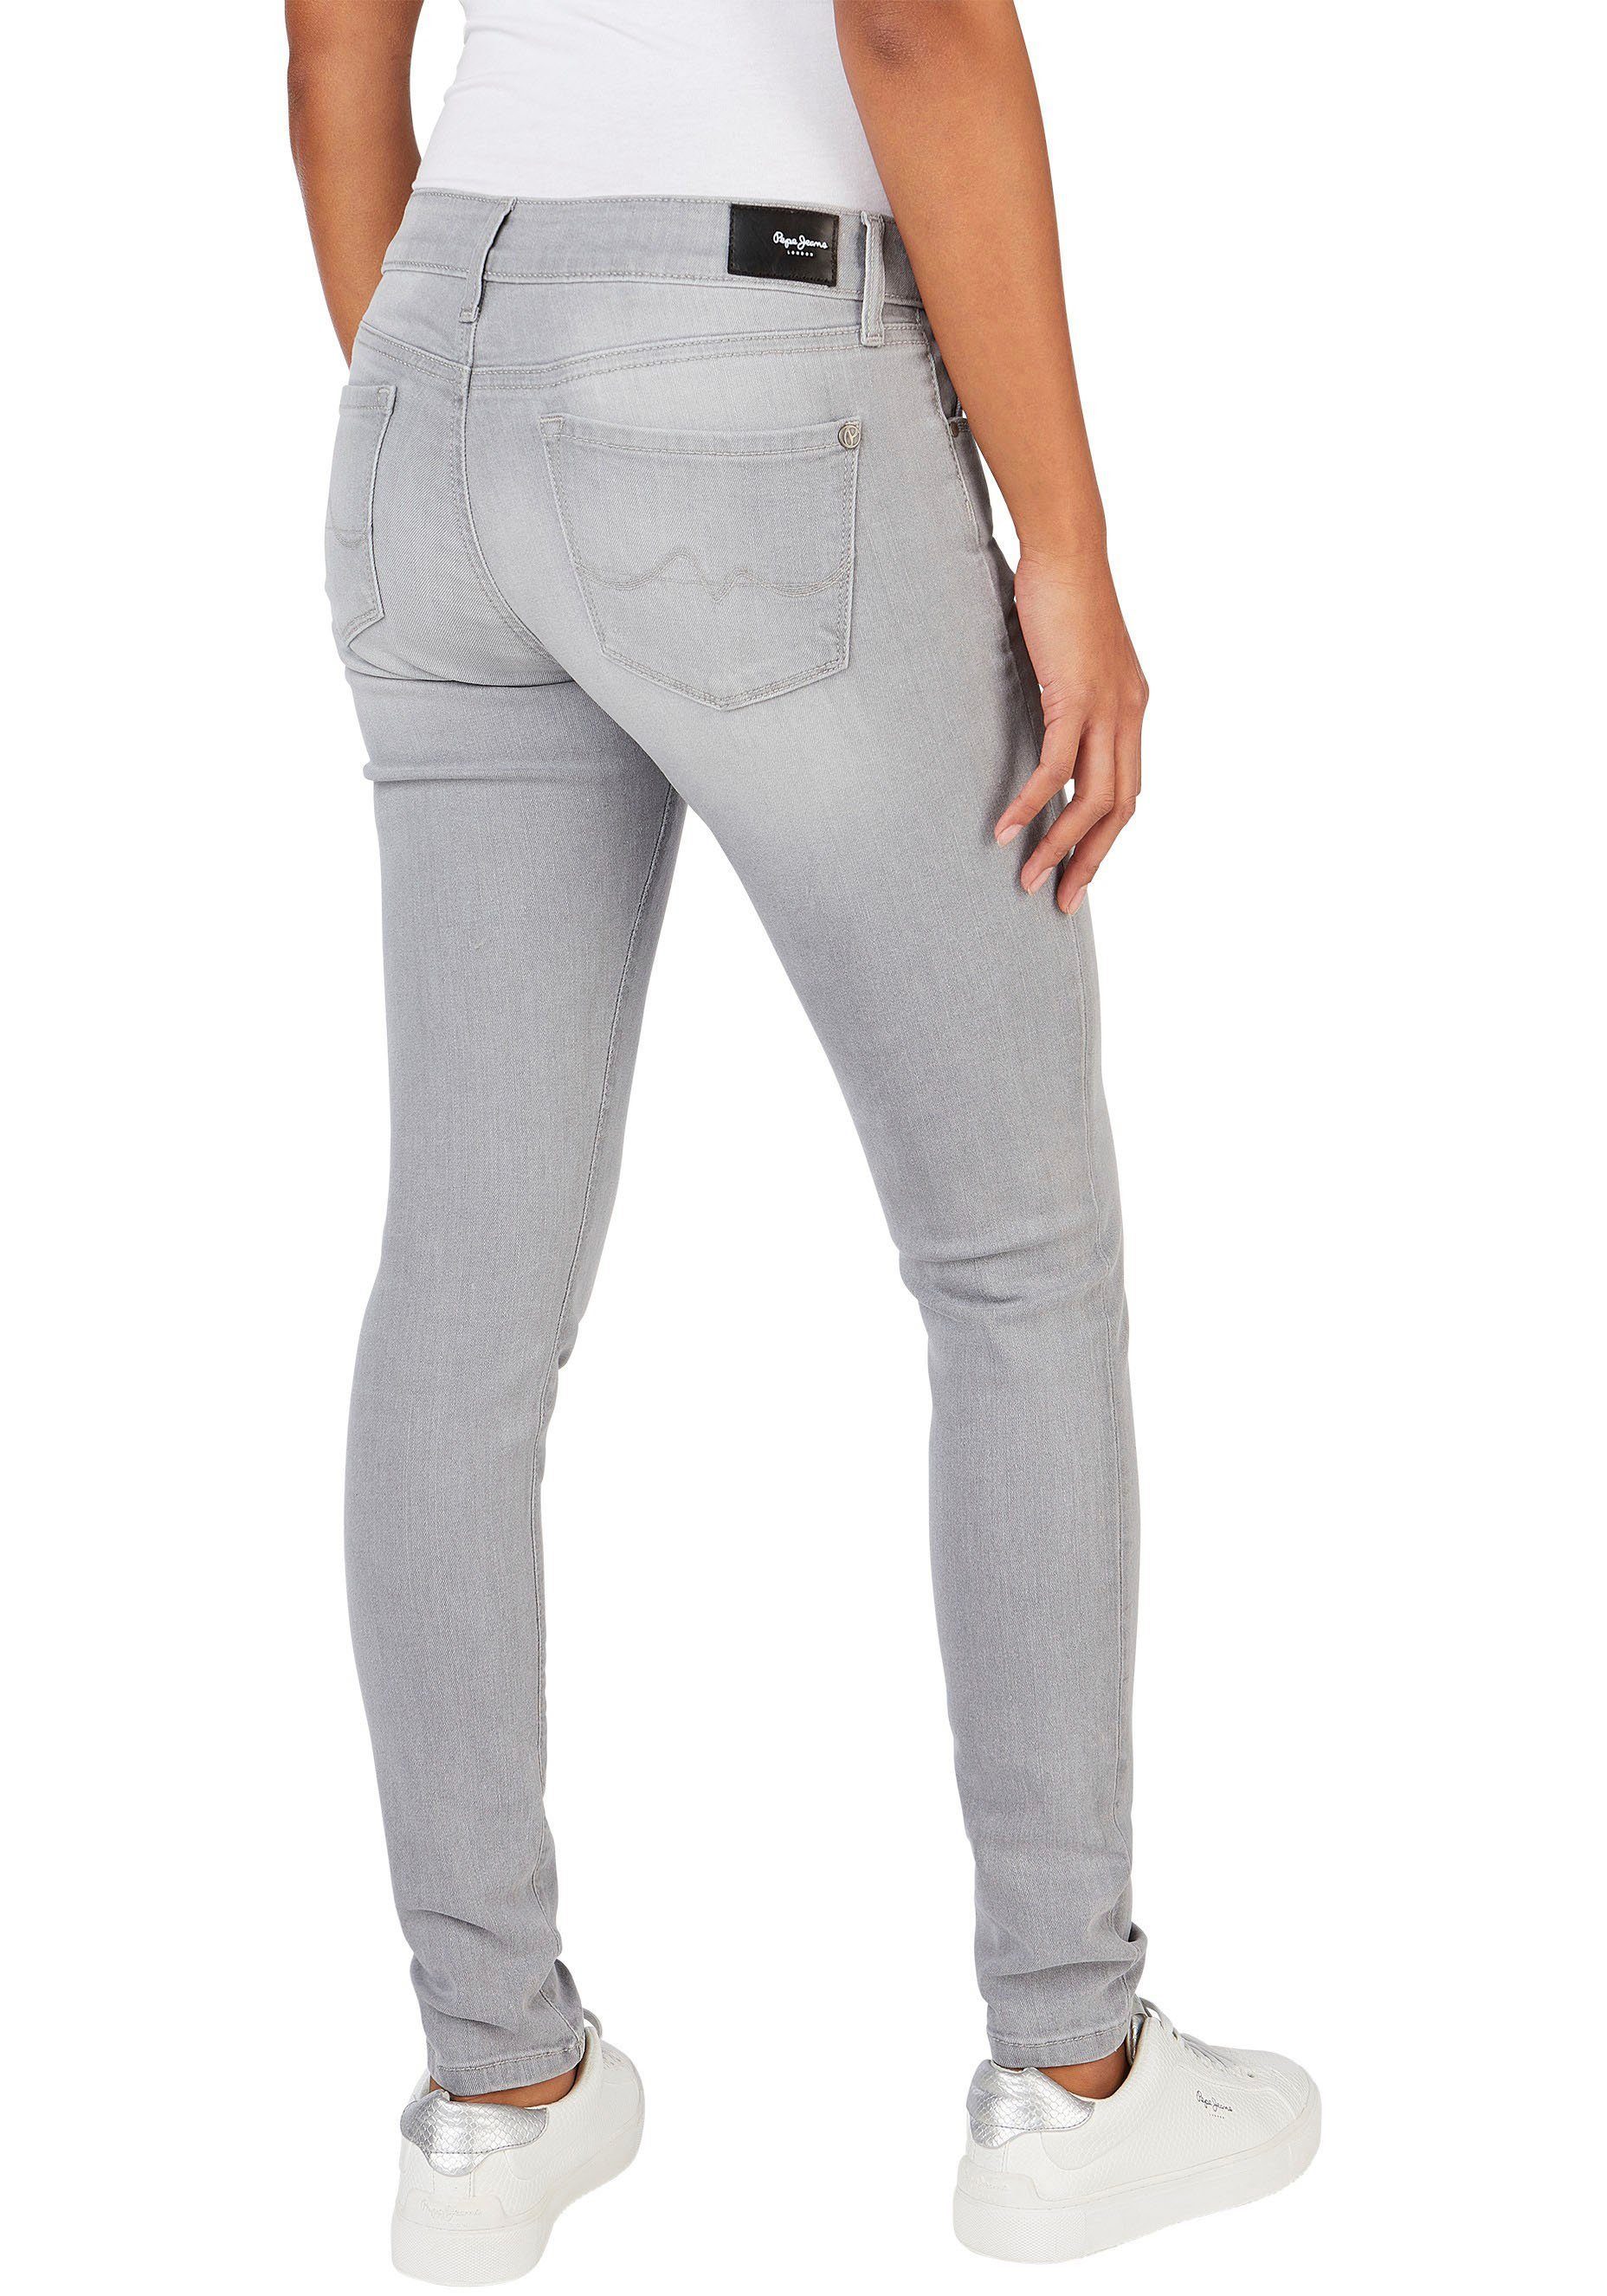 Pepe Jeans Skinny-fit-Jeans SOHO und light grey 5-Pocket-Stil Bund Stretch-Anteil mit im 1-Knopf